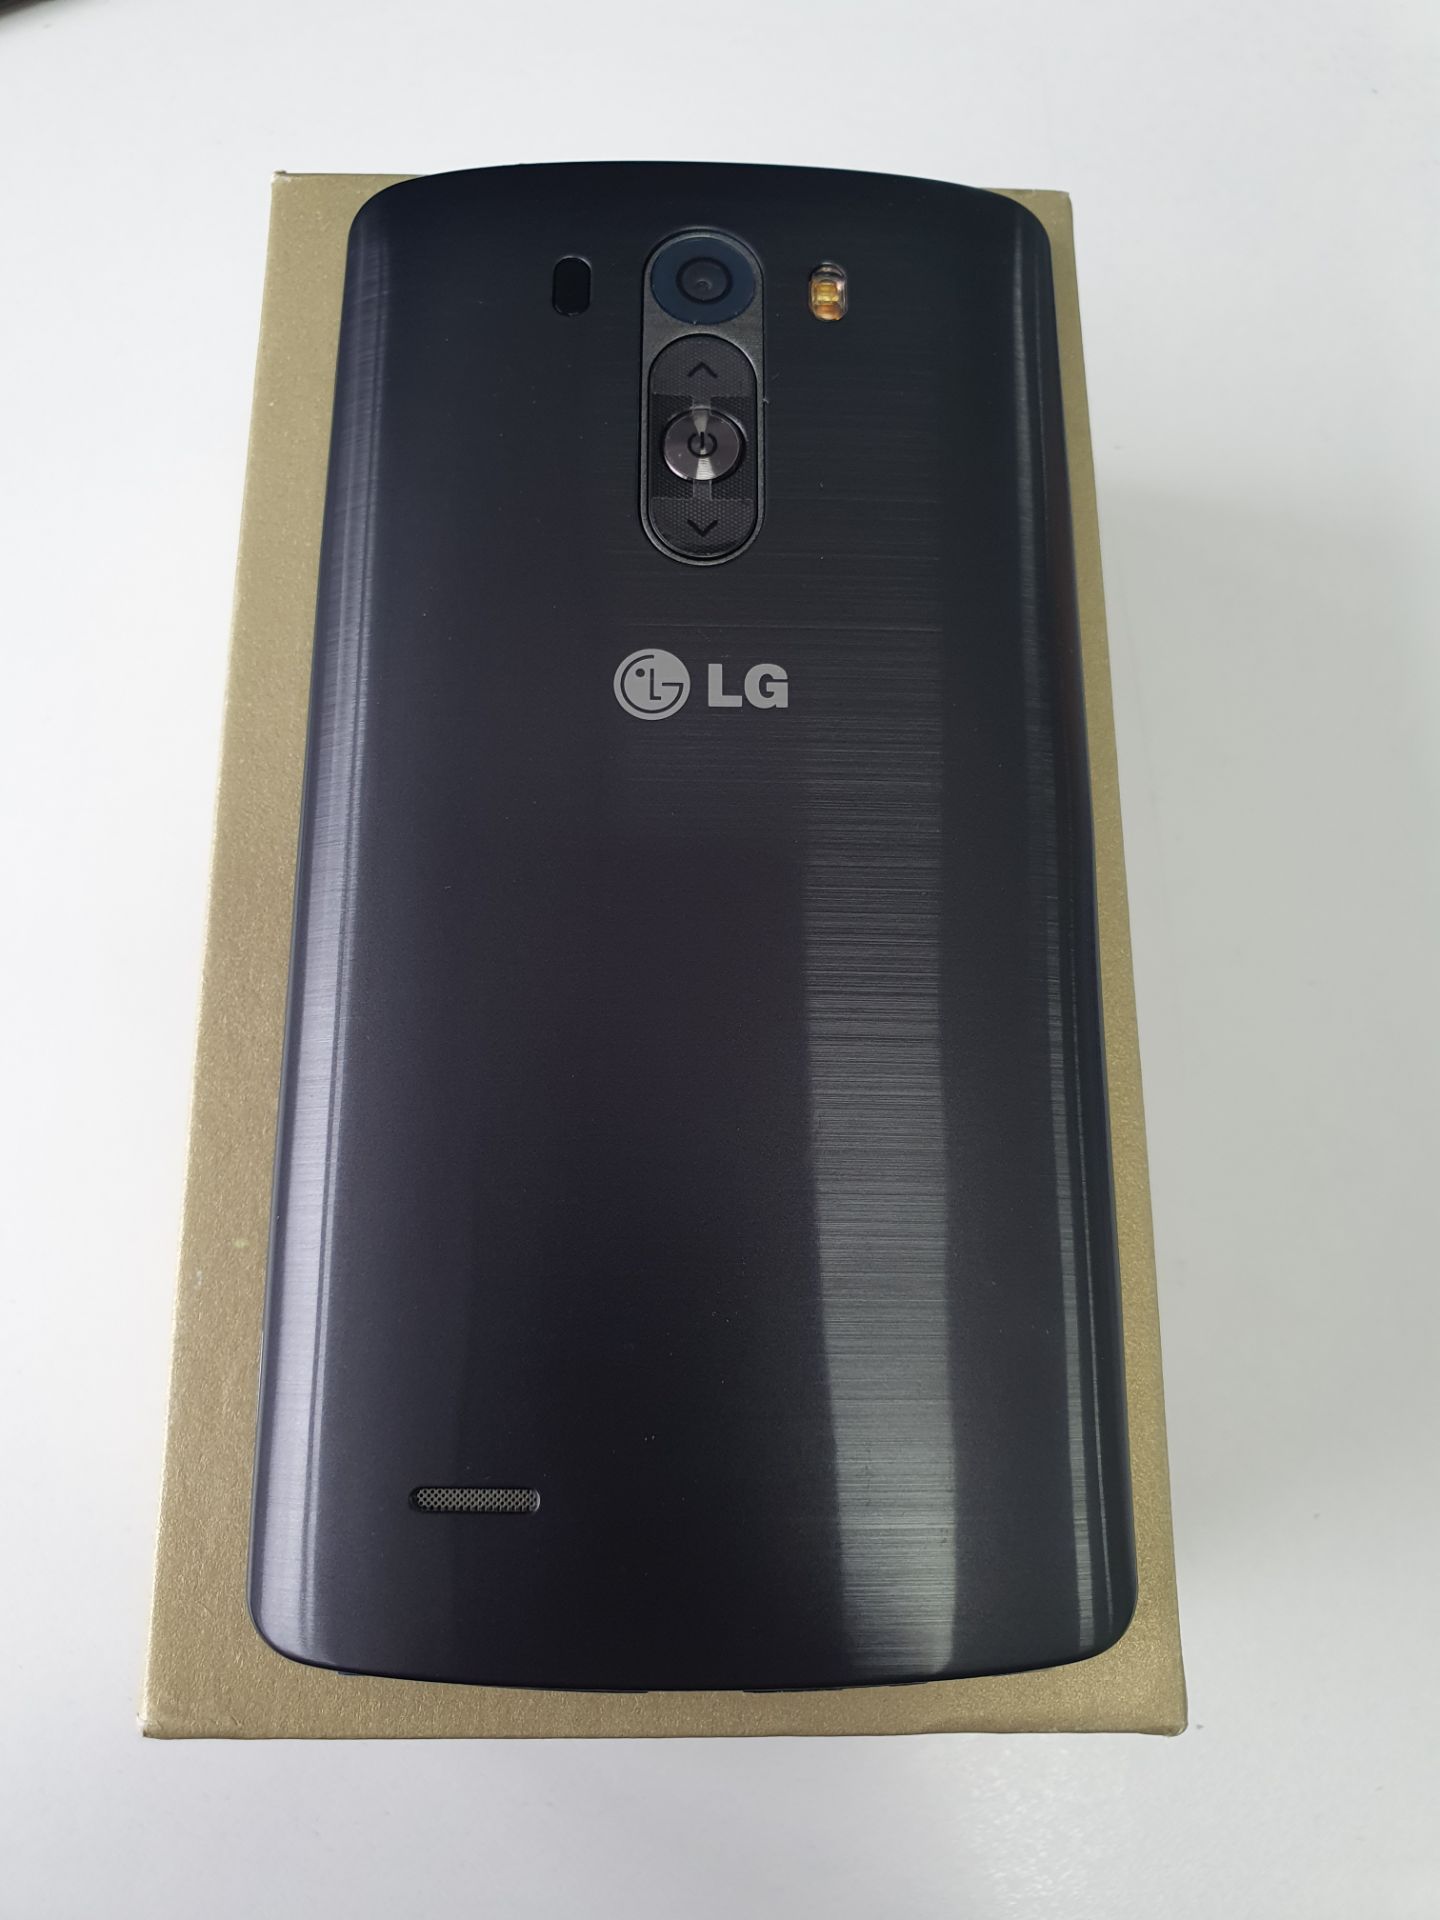 Ex-Display LG G3 Mobile Phone - Image 2 of 2